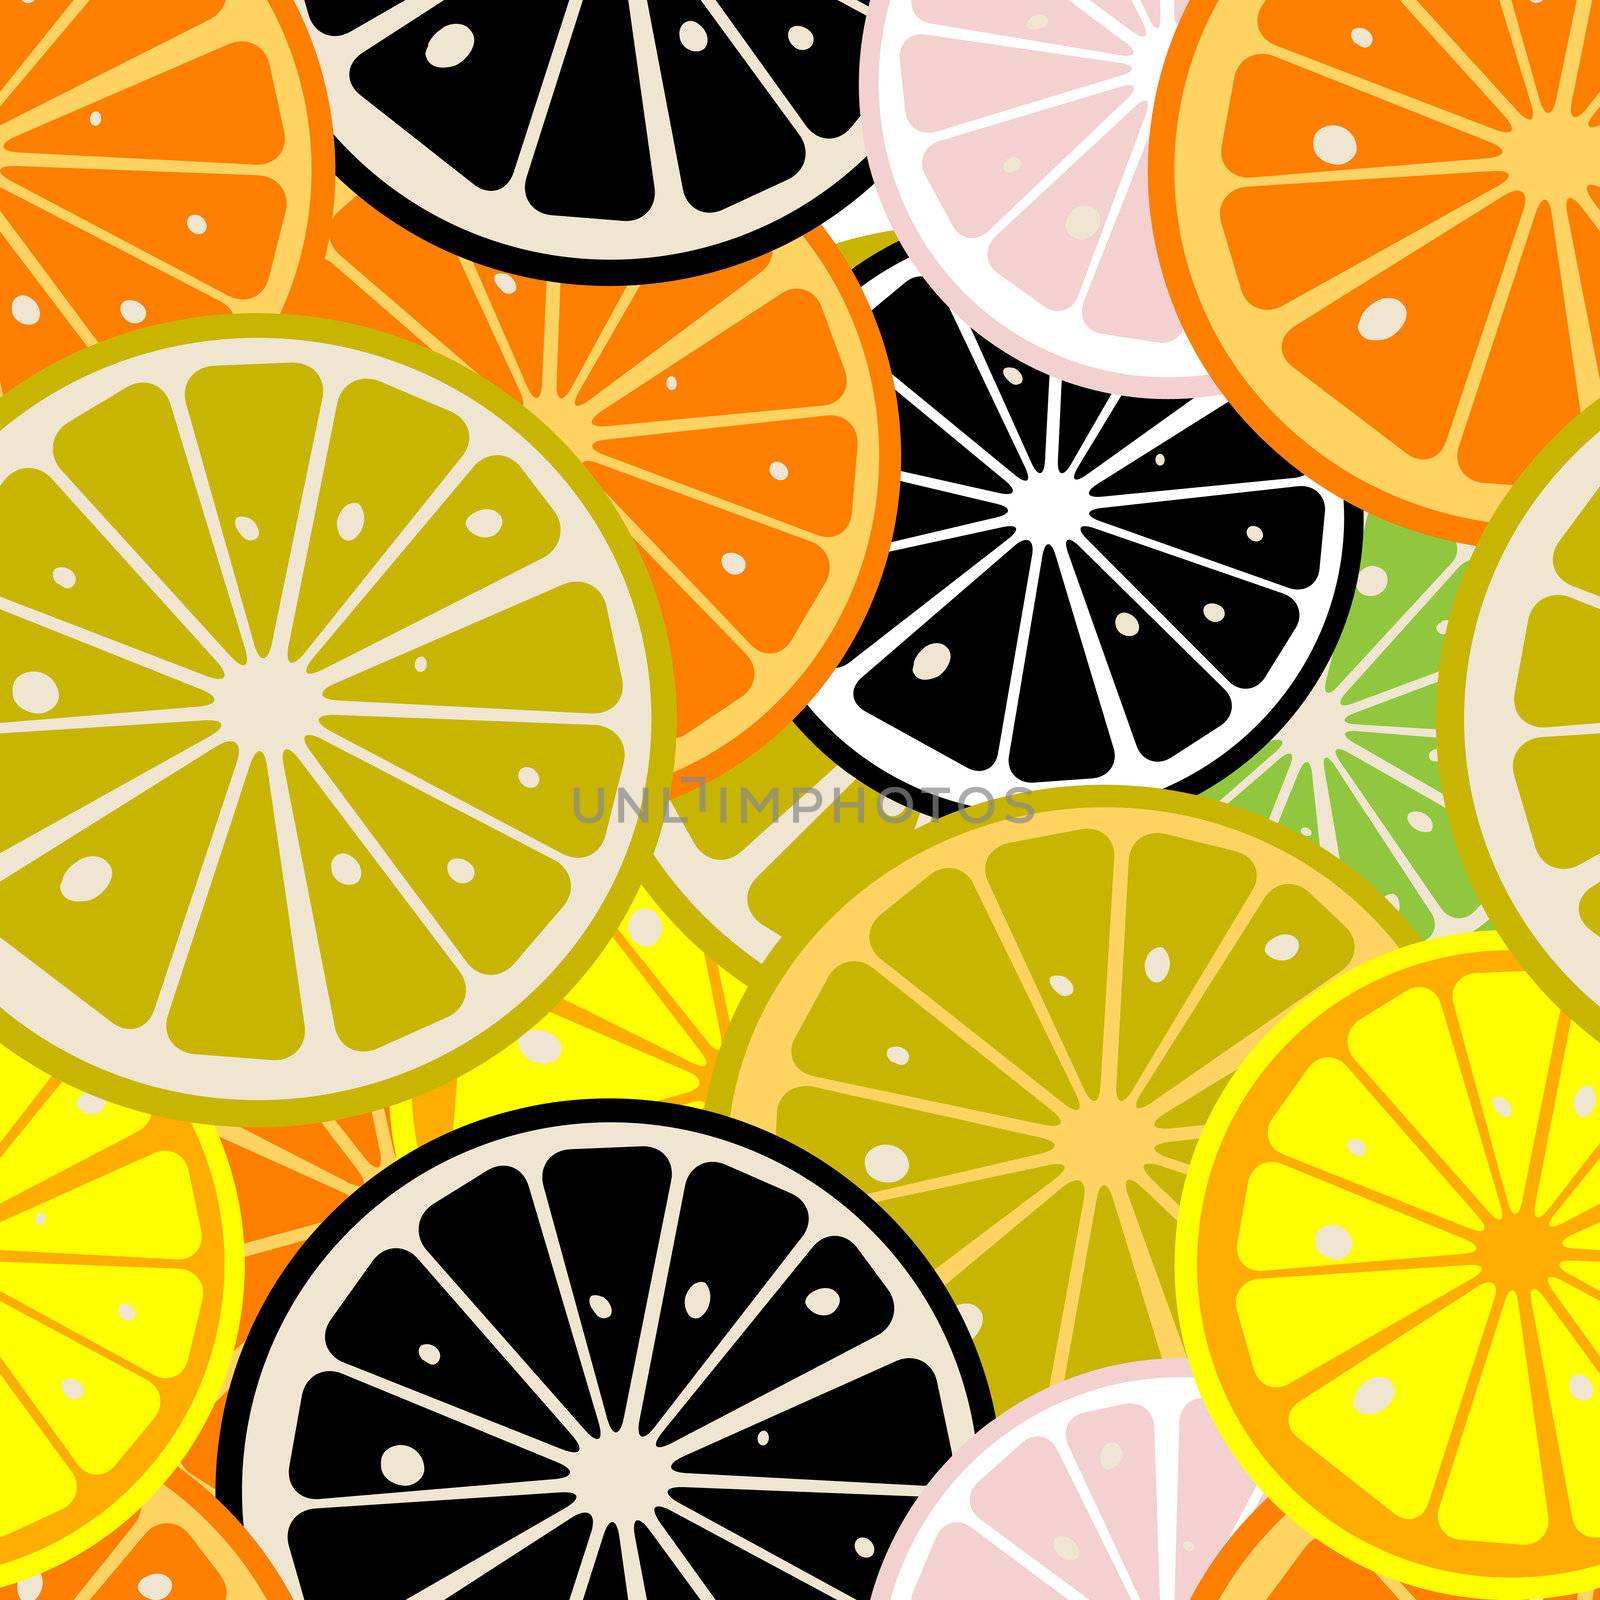 Lemon slices pattern by Lirch